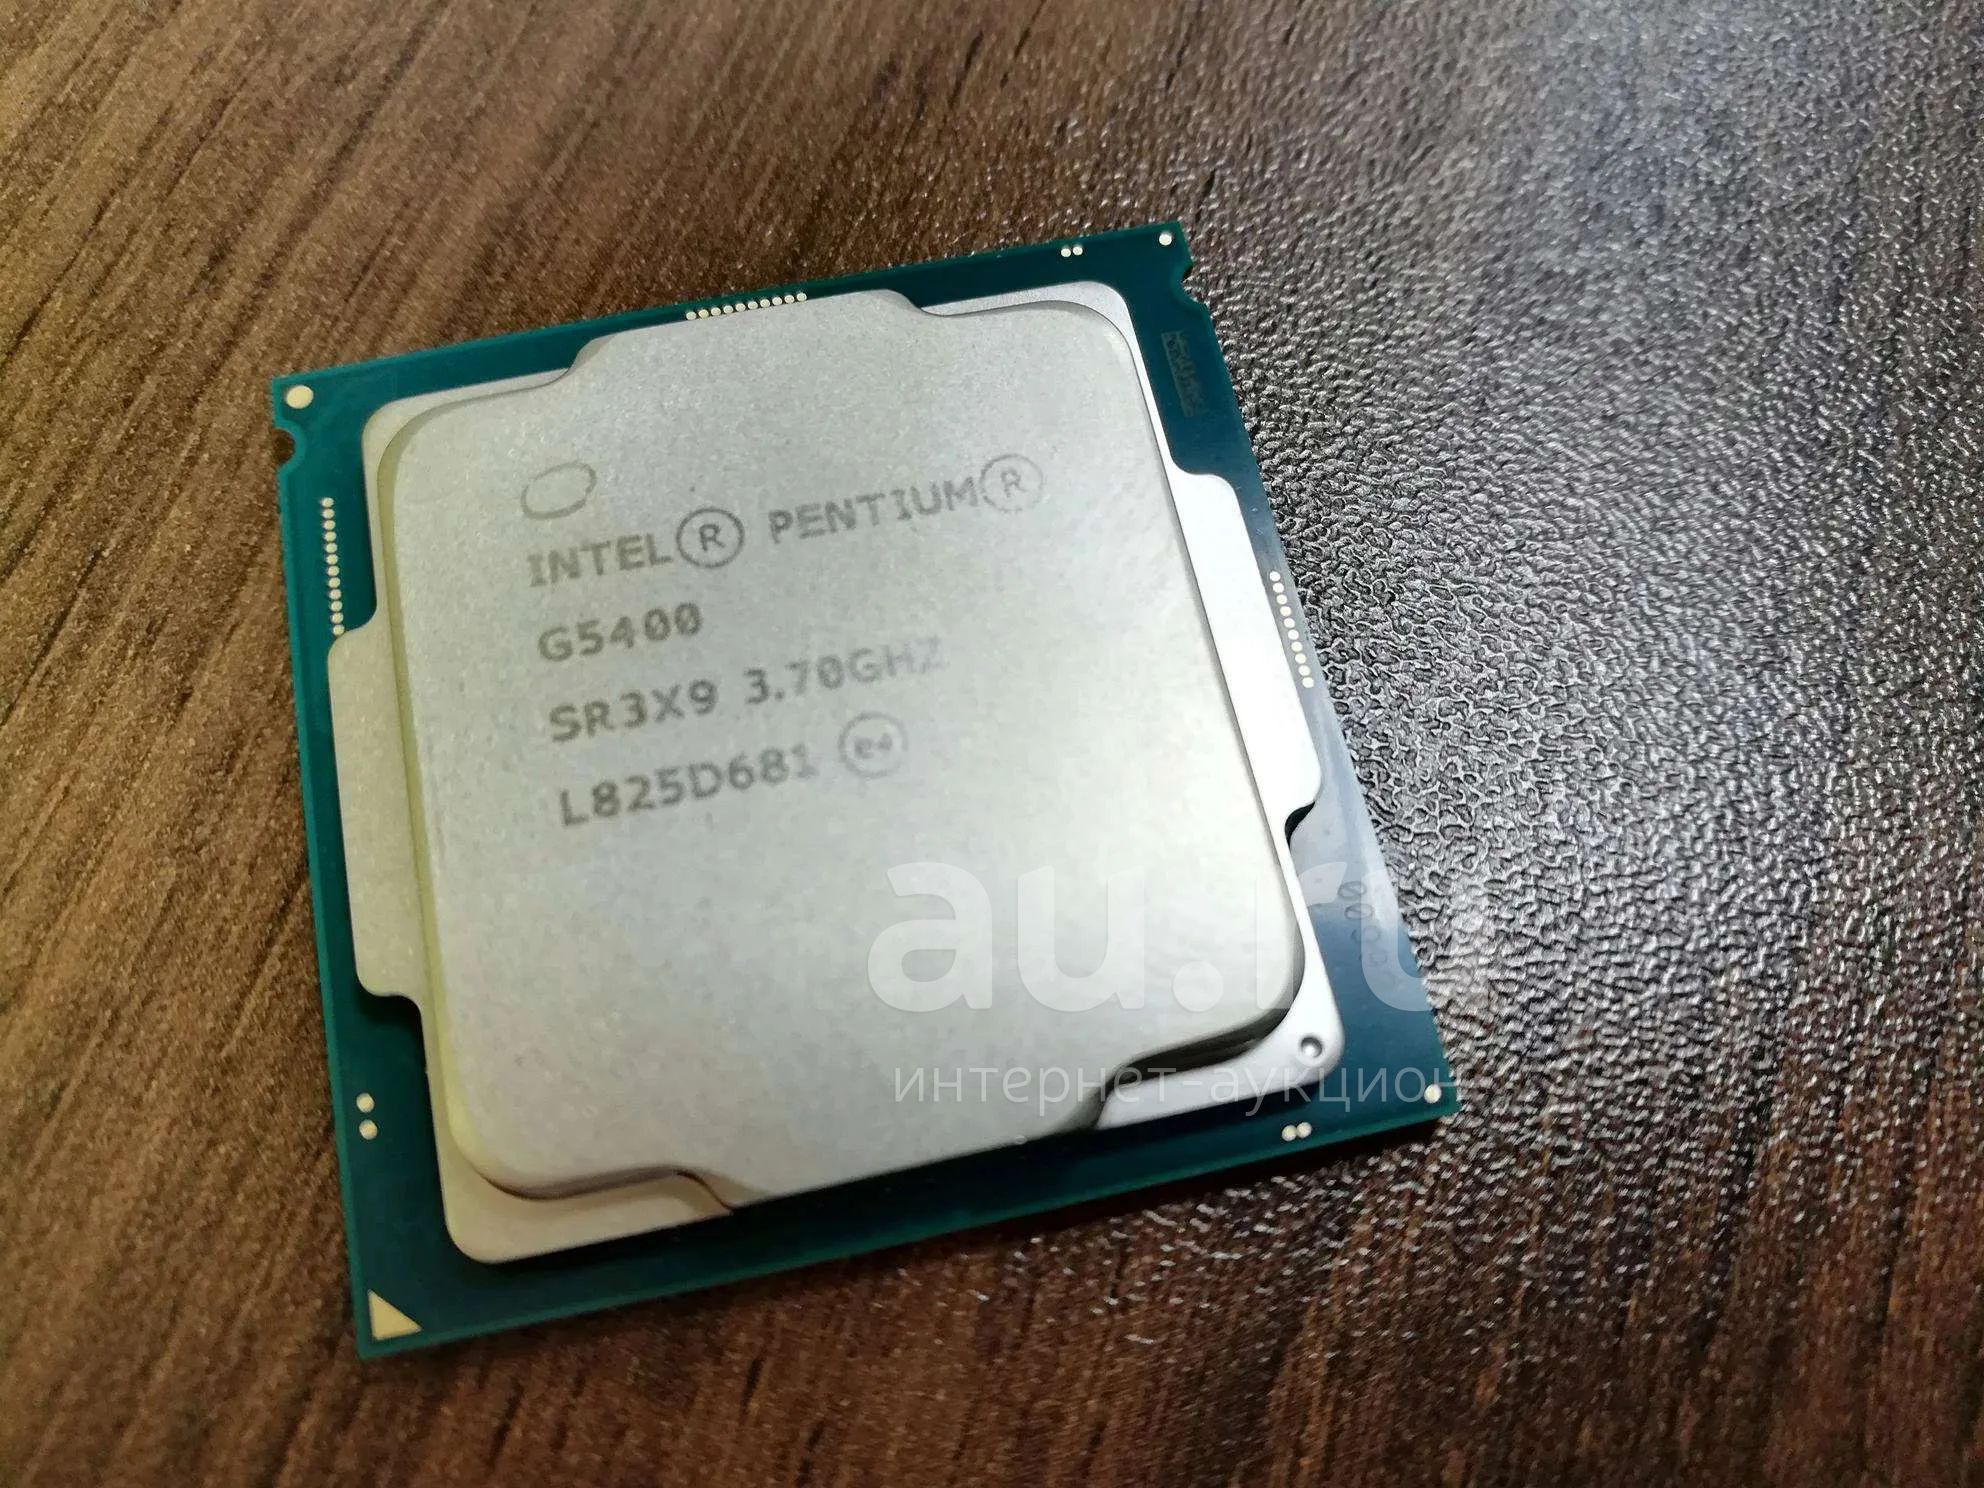 Pentium gold характеристики. Intel(r) Pentium(r) Gold g5400 CPU. Intel Pentium g5400. Gold g5400 CPU. Процессор Intel r Pentium r Gold g5400 CPU 3.70GHZ,.